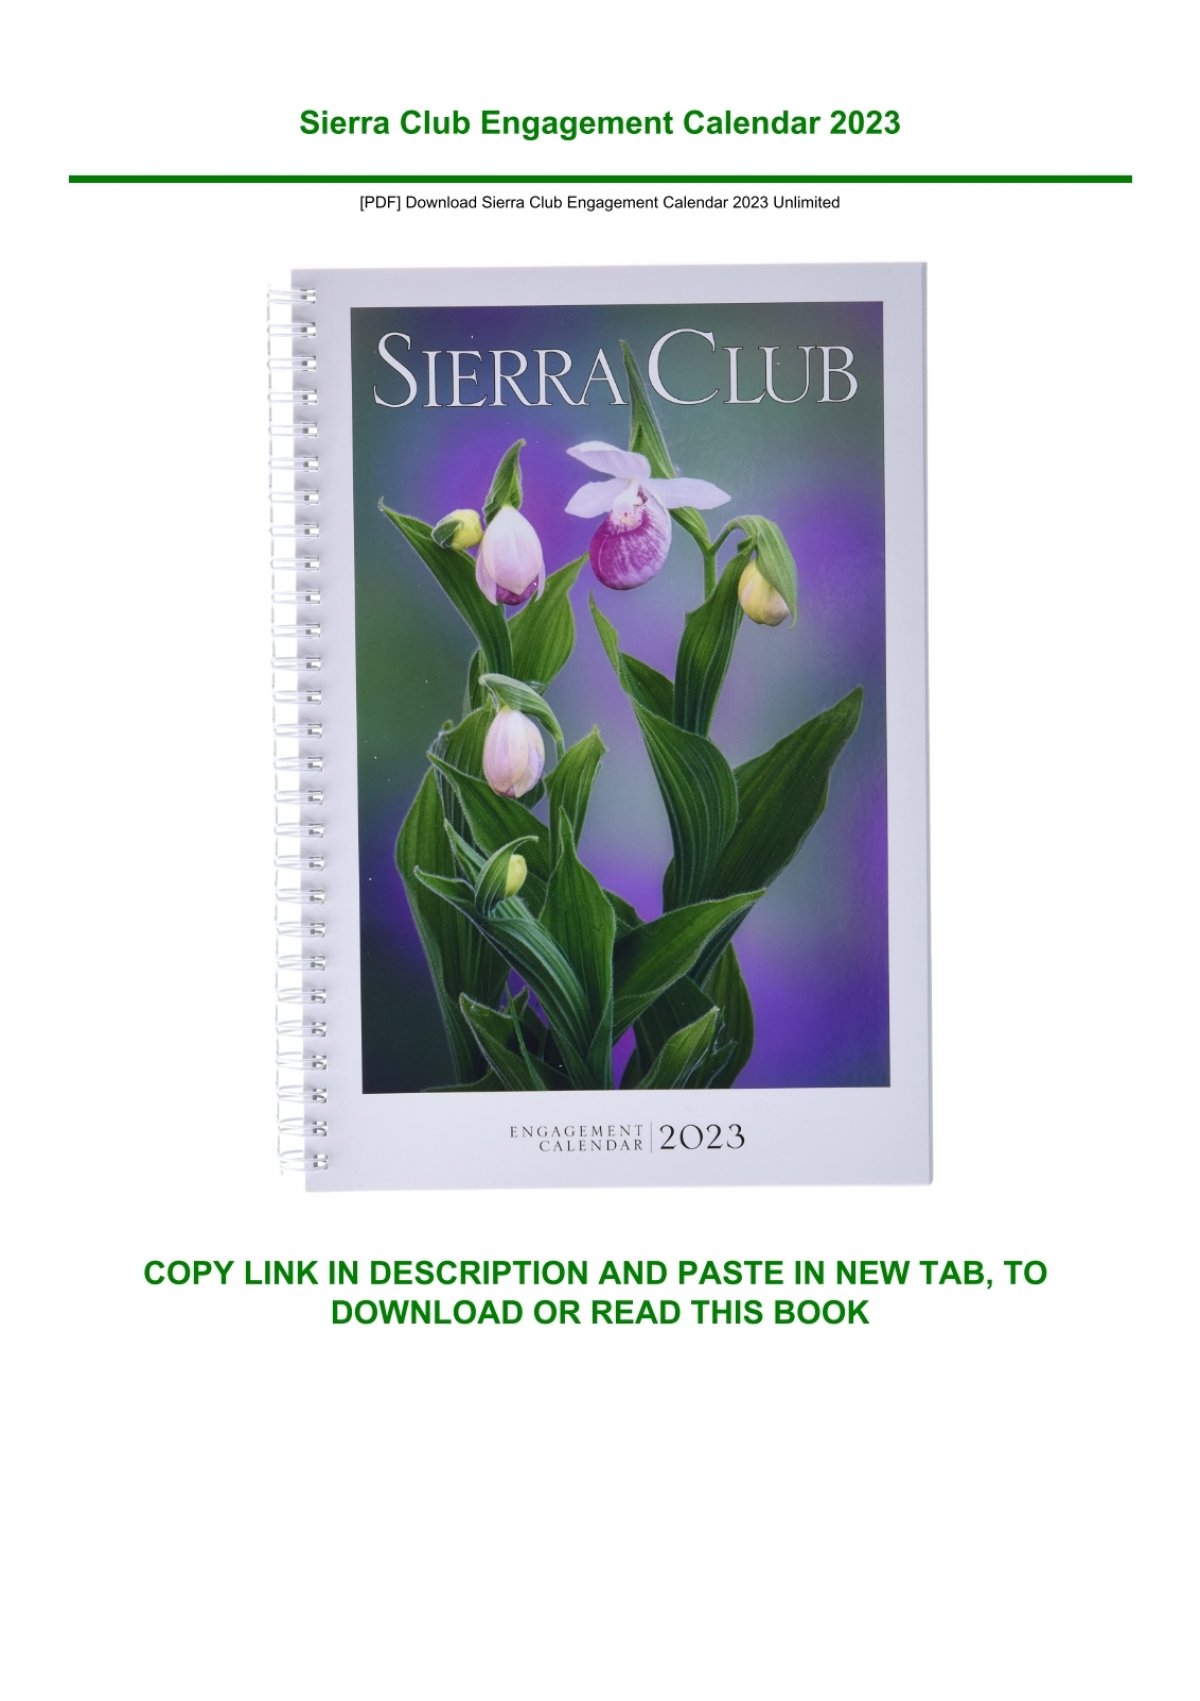 [PDF] Download Sierra Club Engagement Calendar 2023 Unlimited